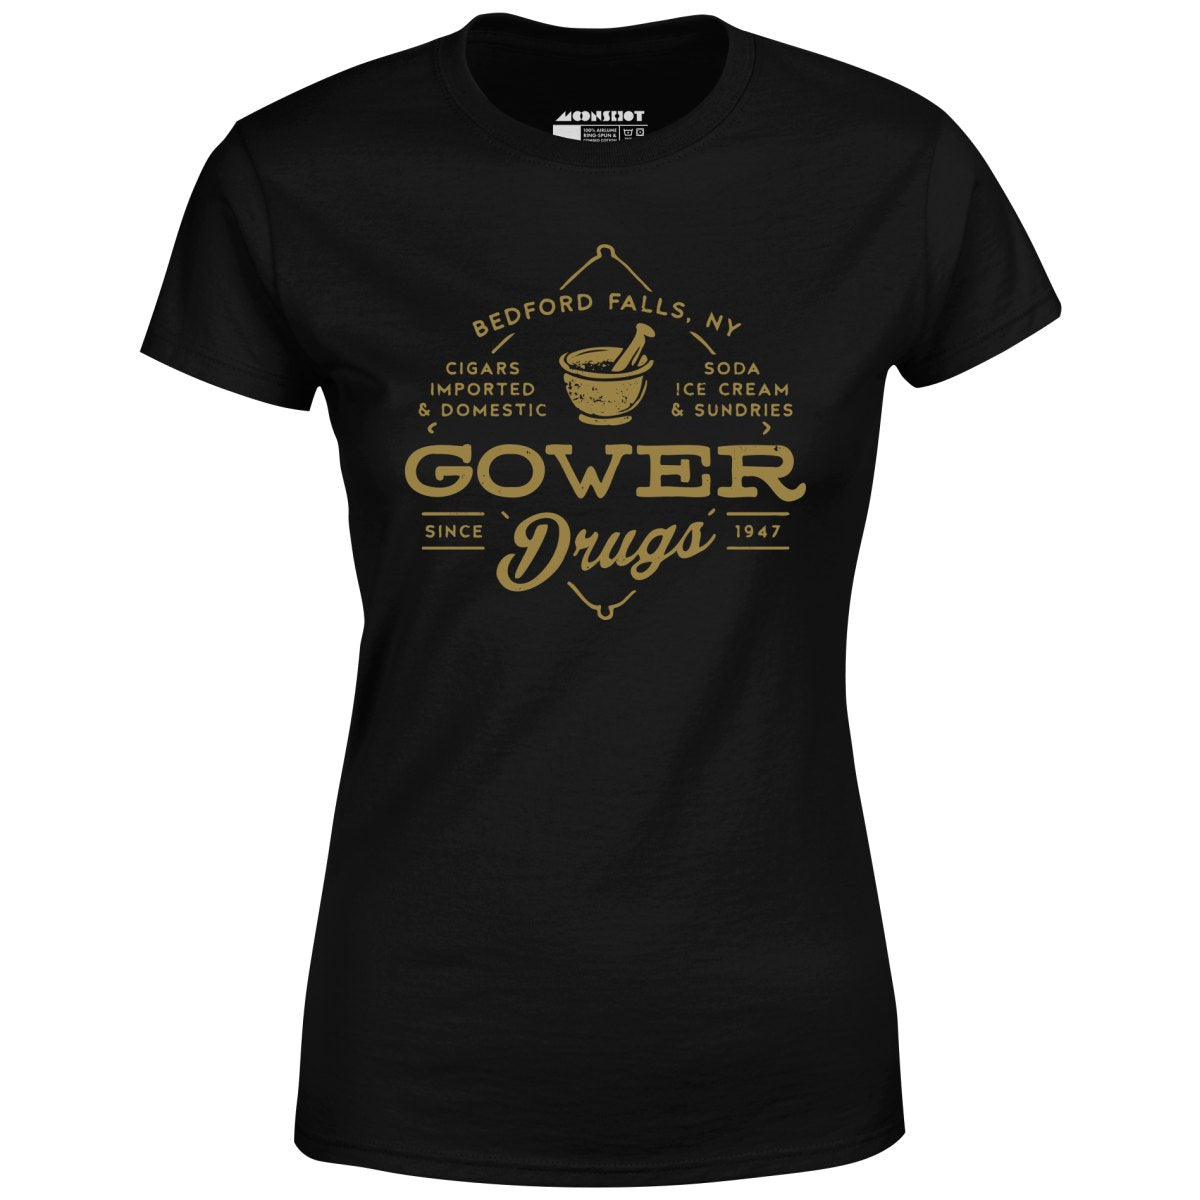 Gower Drugs - Bedford Falls, NY - Women's T-Shirt